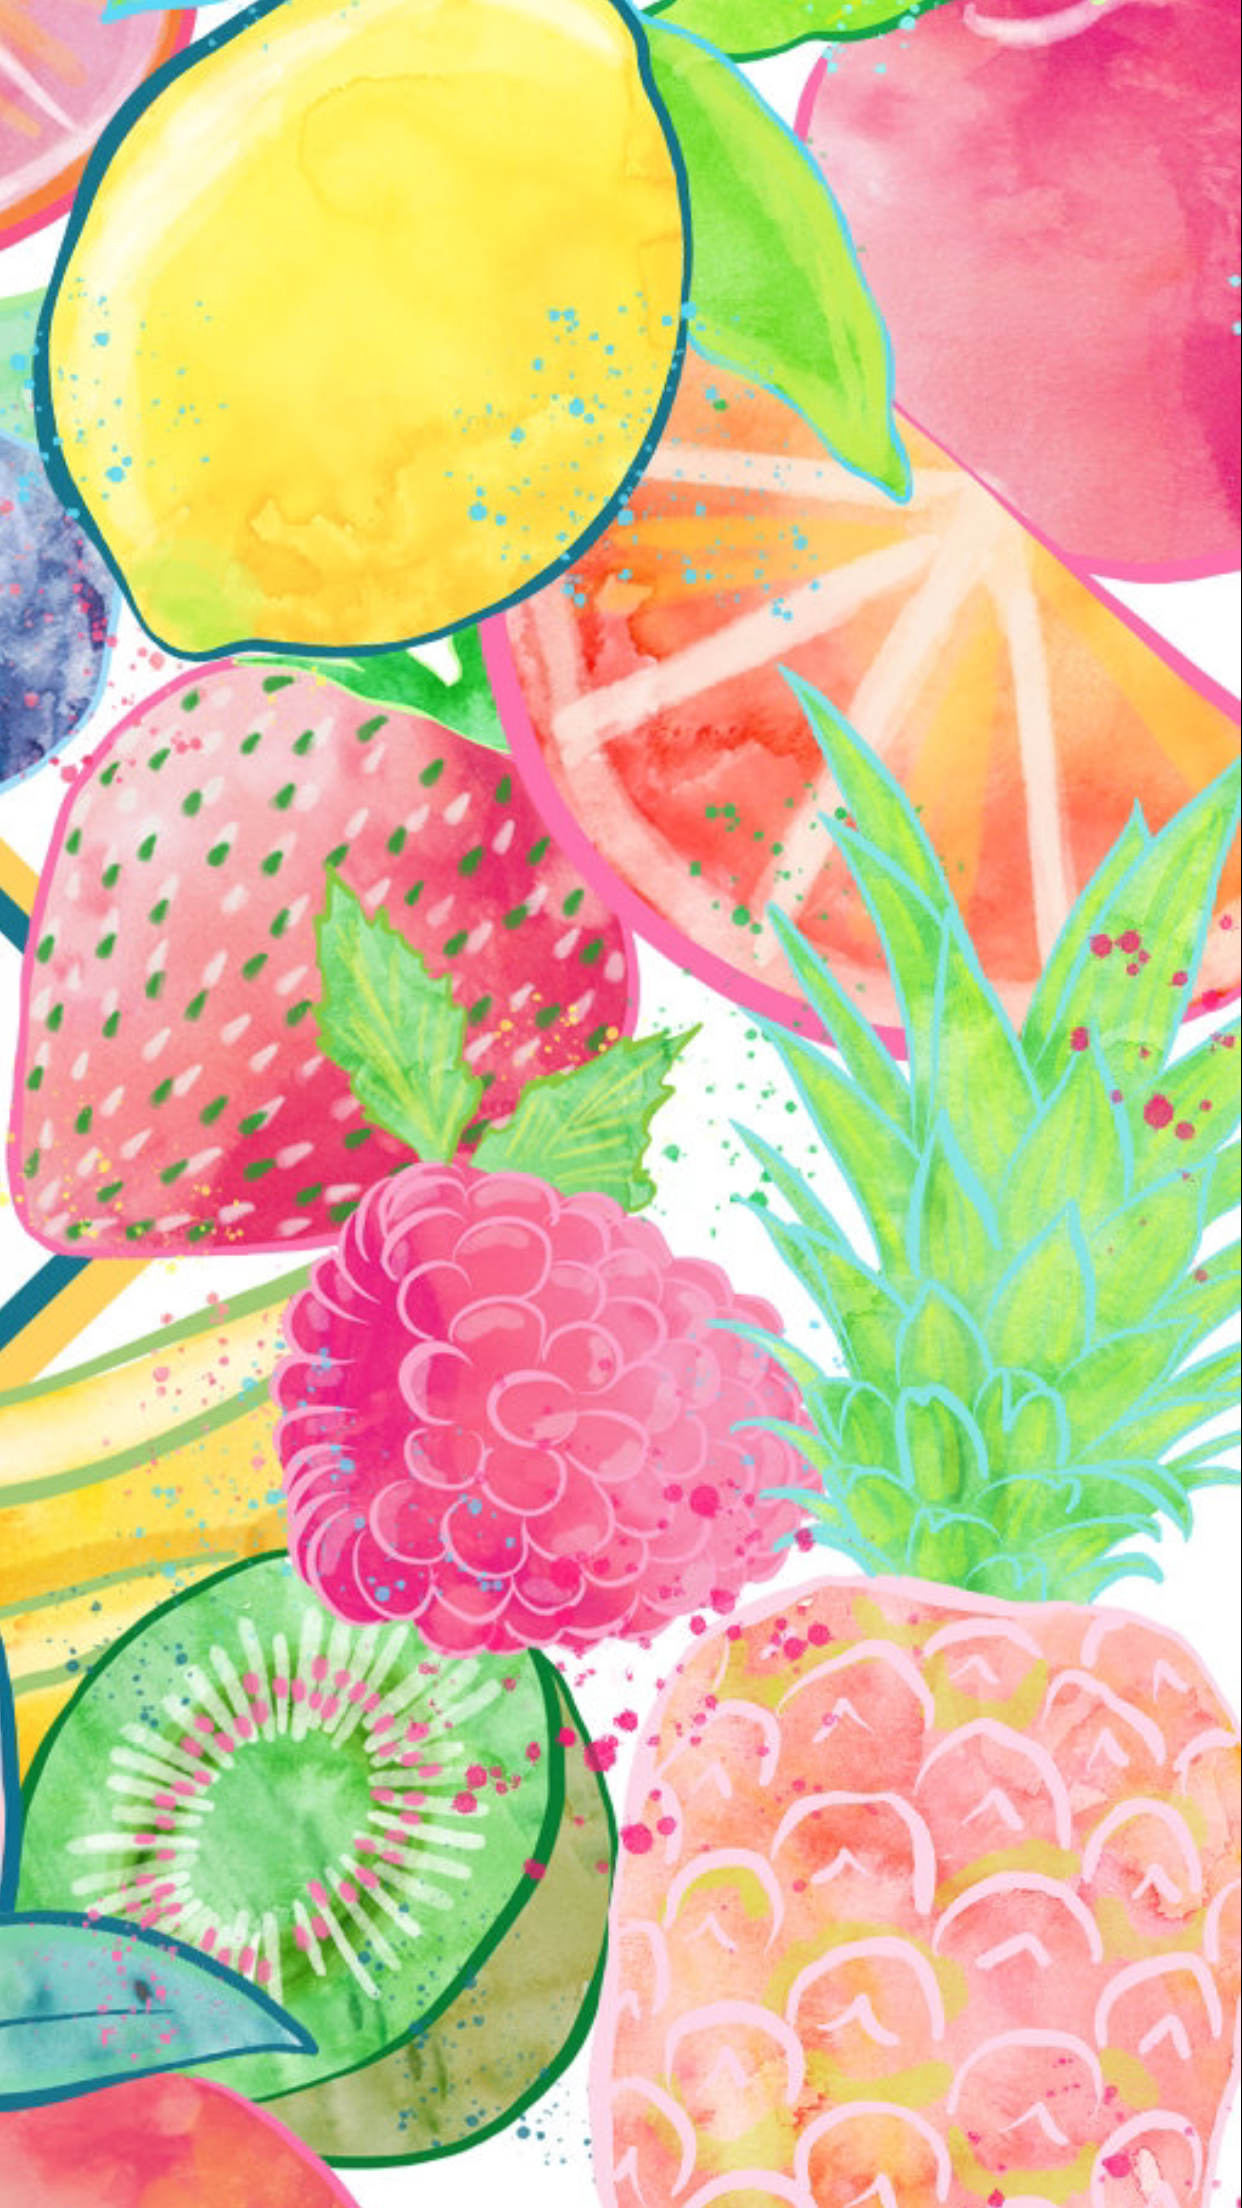 Wallpaper. Painting wallpaper, Fruit wallpaper pattern, Fruit wallpaper